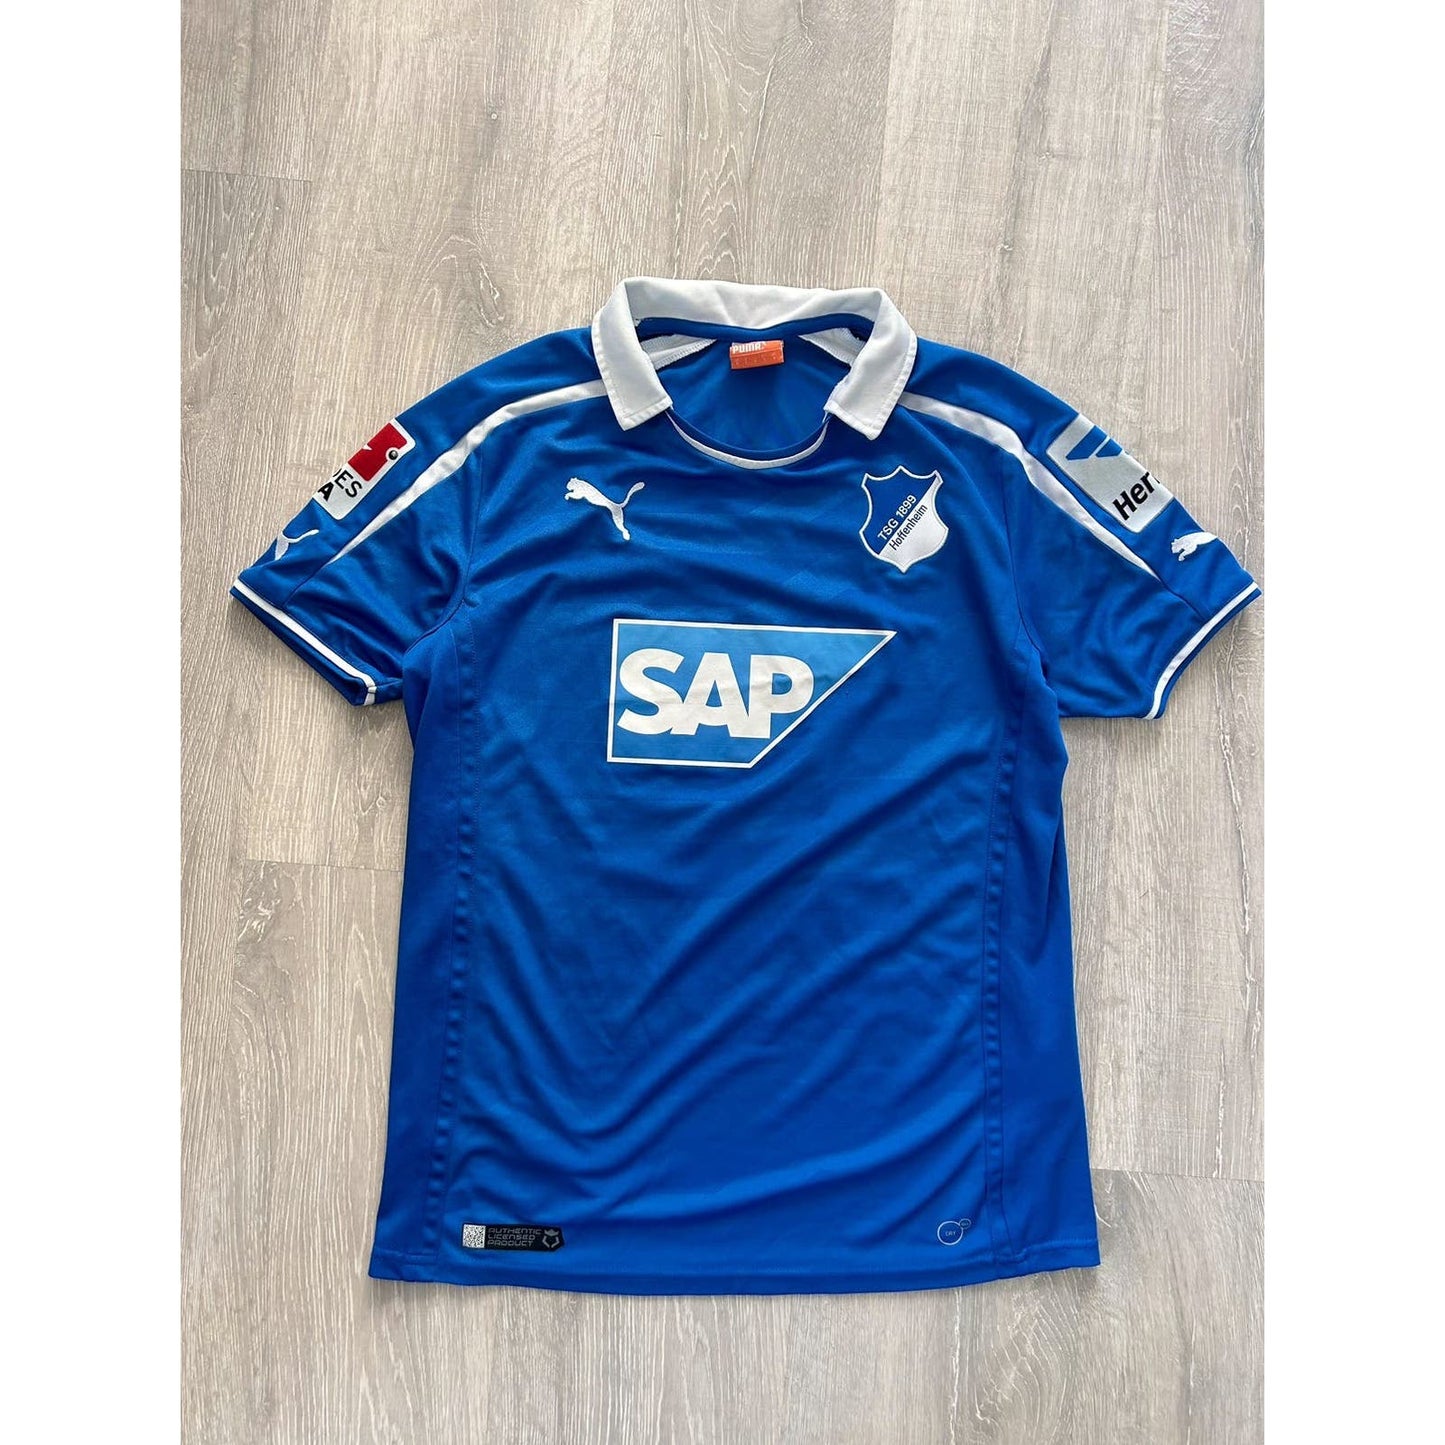 Volland Hoffenheim Puma Sap Jersey 13/14 vintage blue